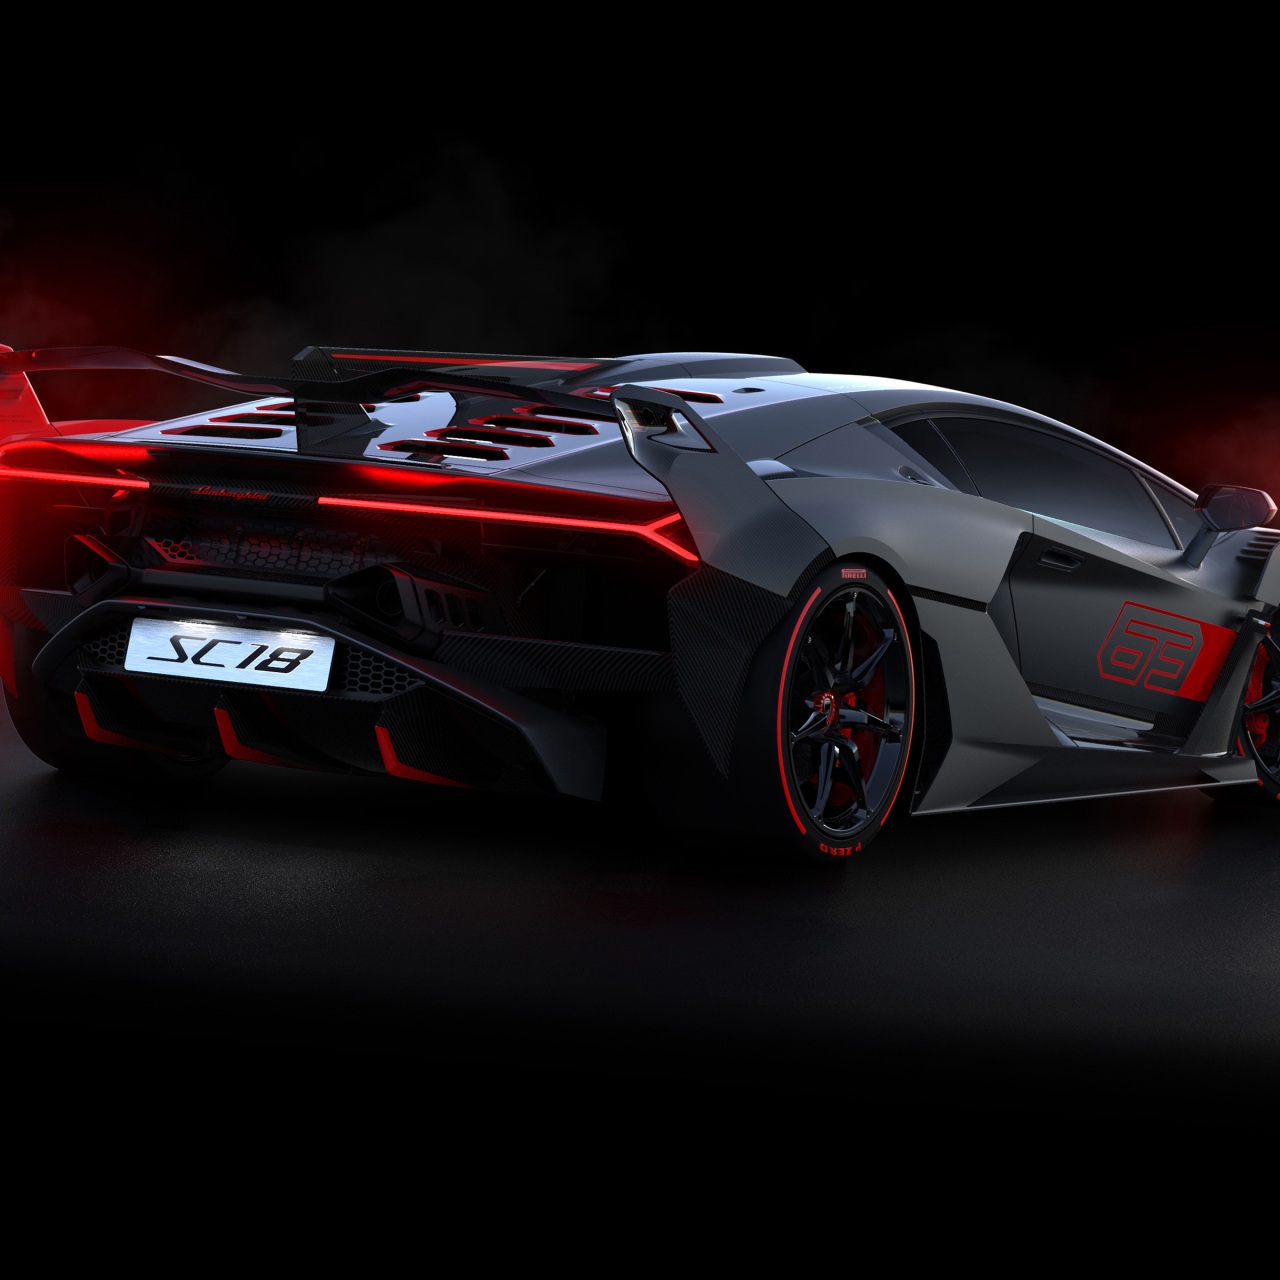 Lamborghini SC18 Alston rear 4K - 4k Wallpapers - 40.000+ ipad ...